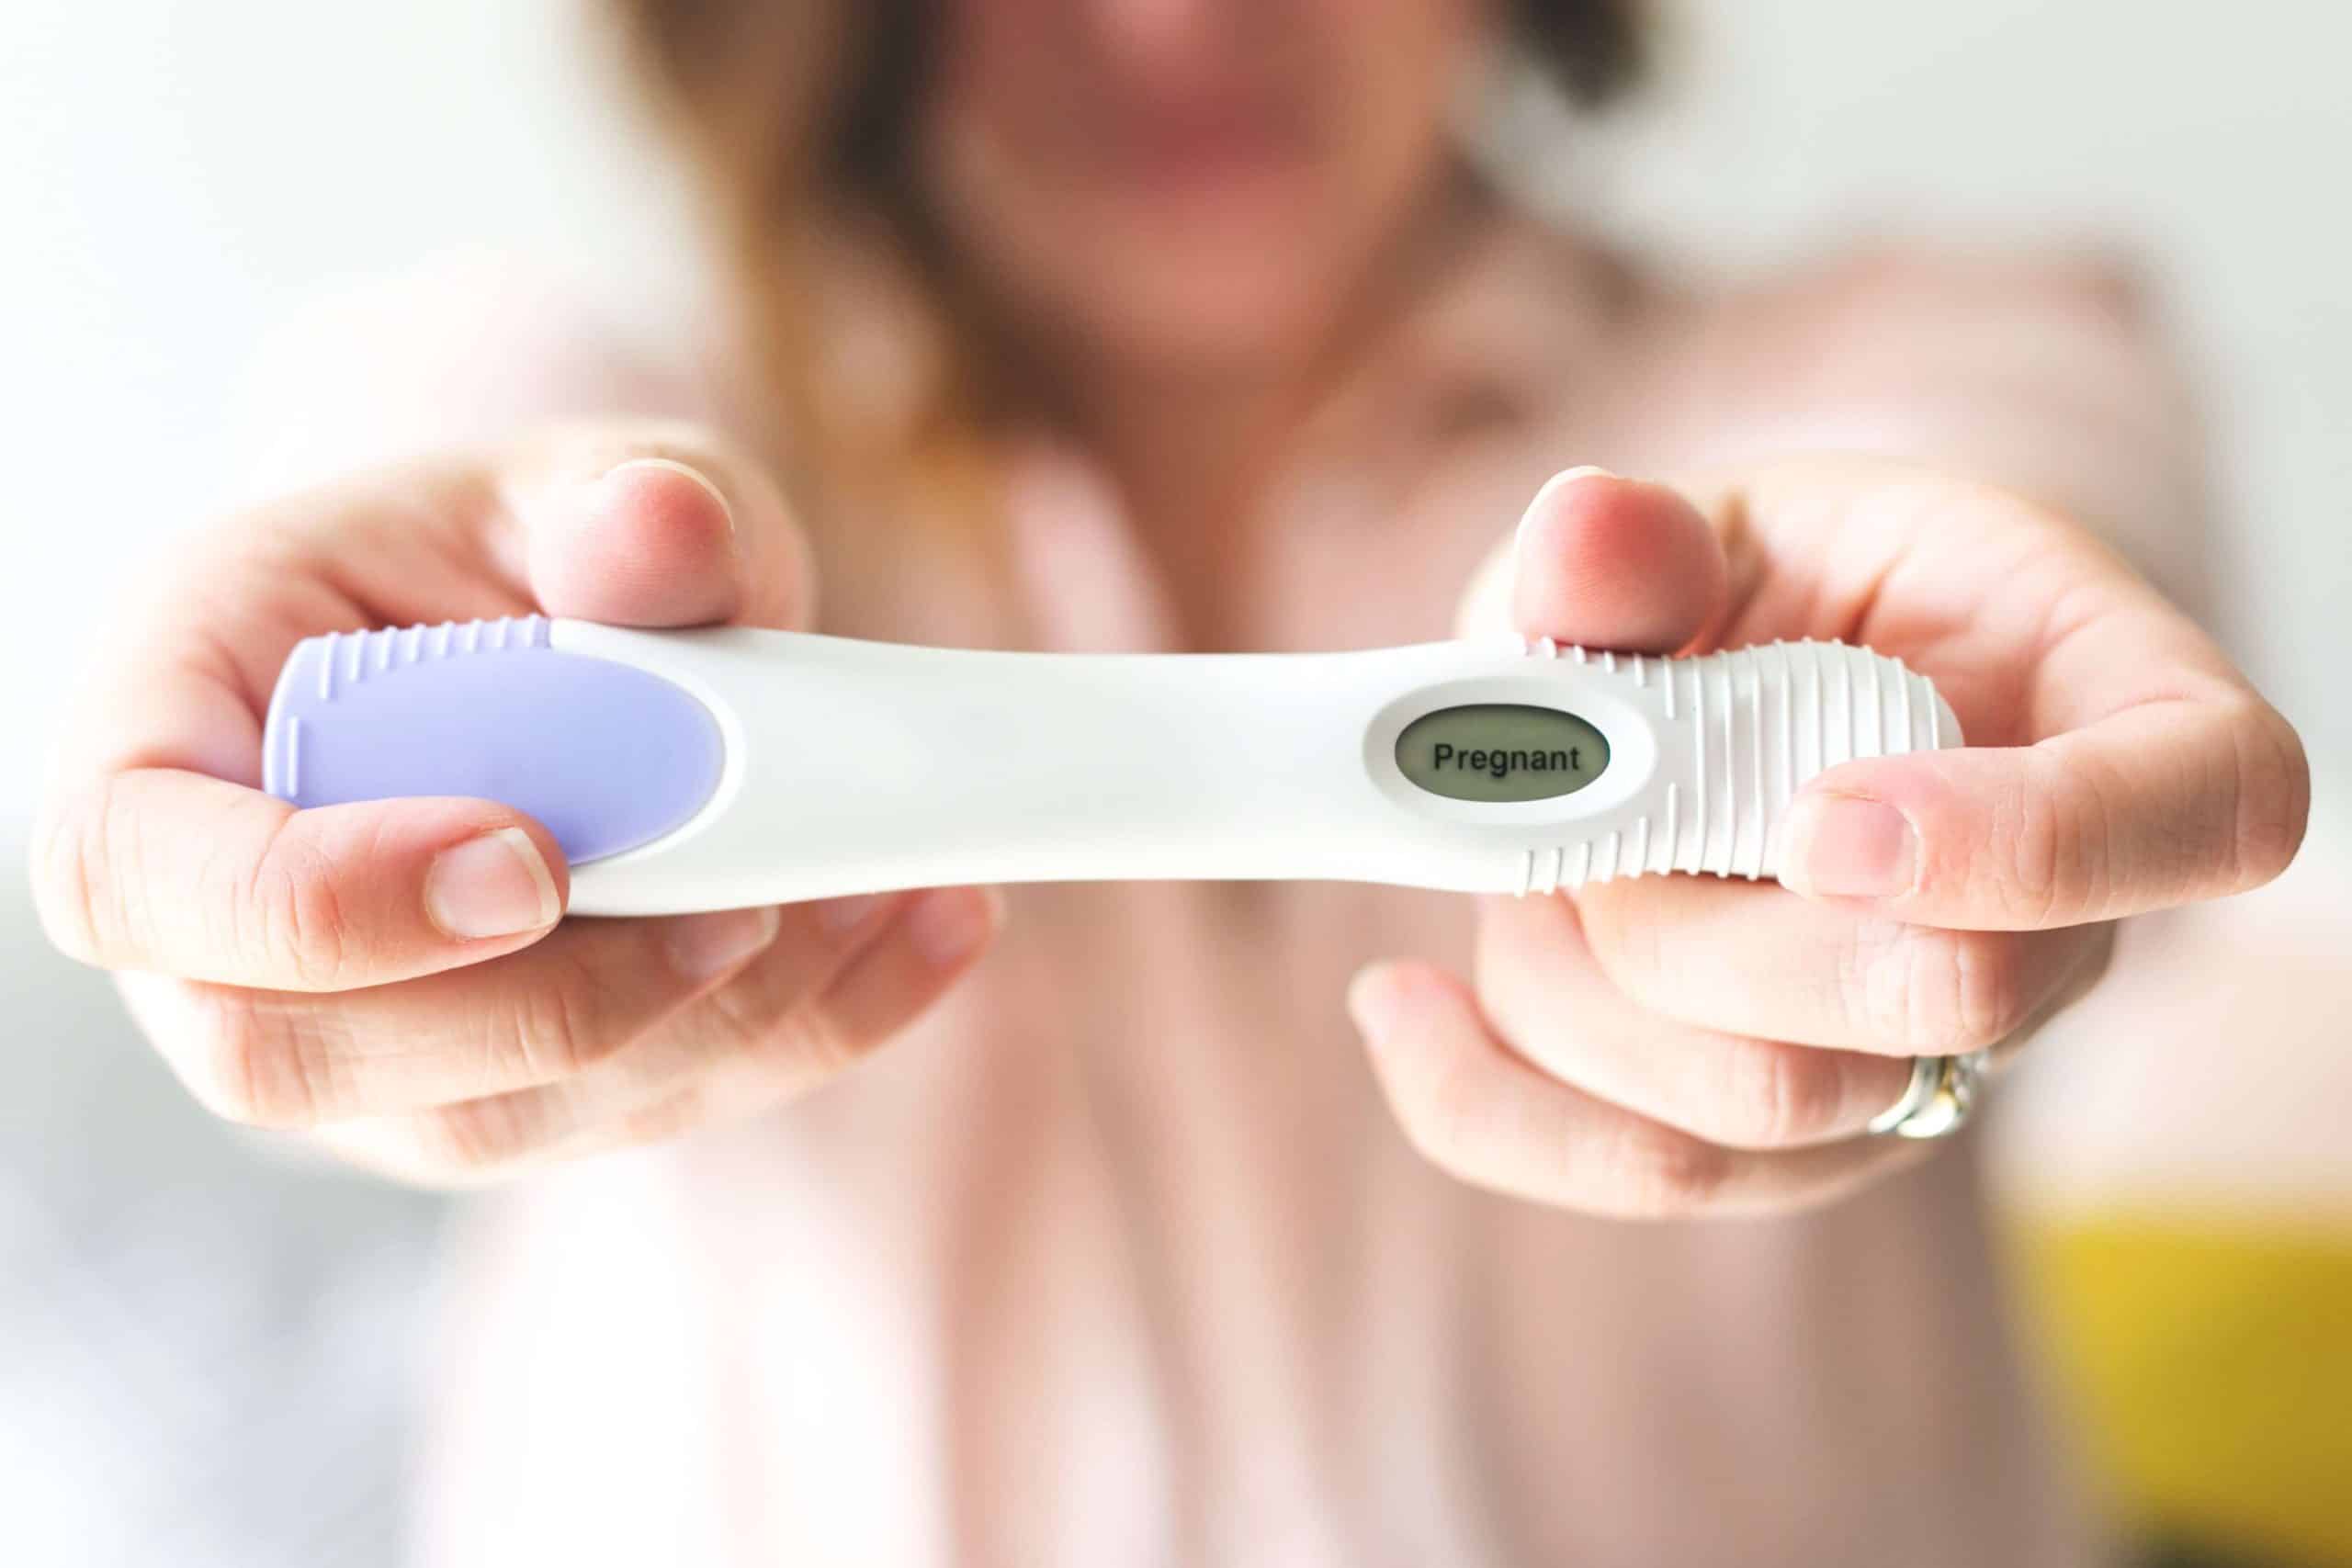 Teste de gravidez pode dar falso negativo?